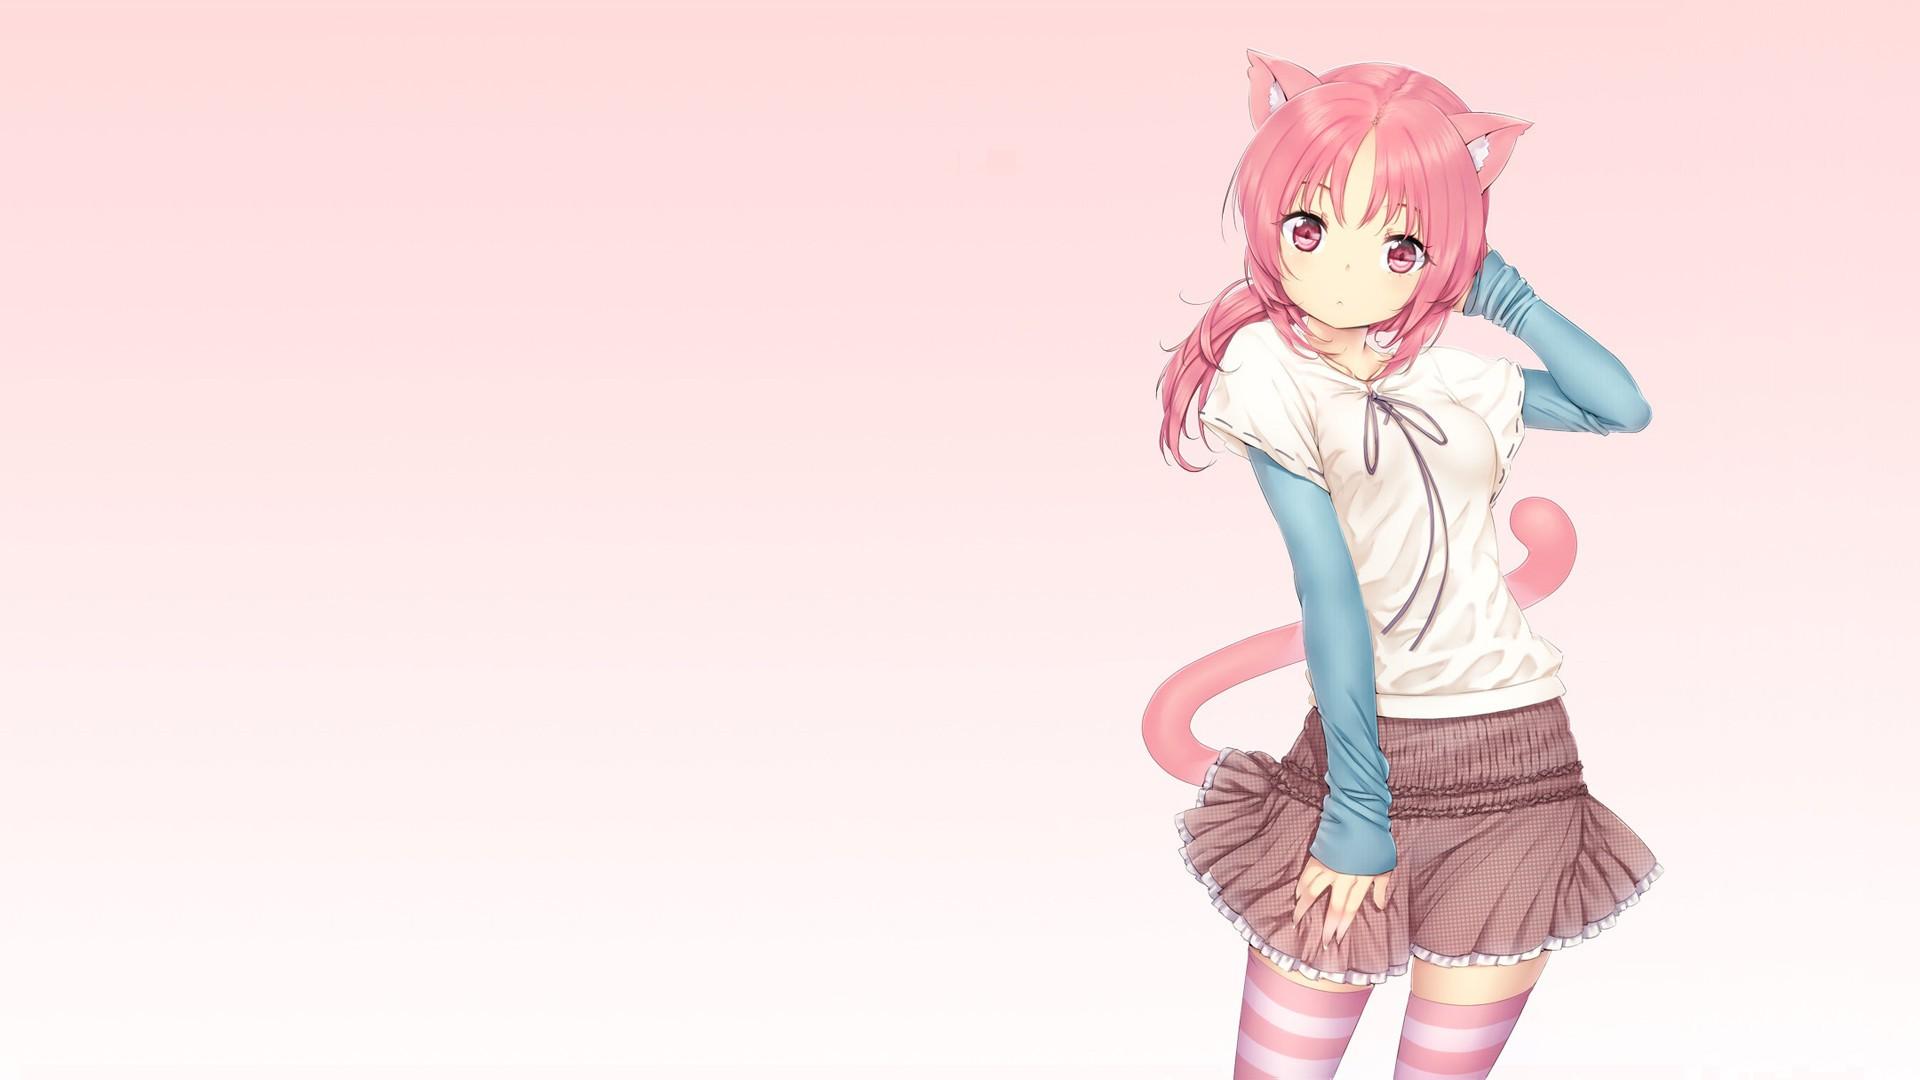 Anime Girls  anime girlkawaii cute cat ears nekopink hair  umbrella  Facebook